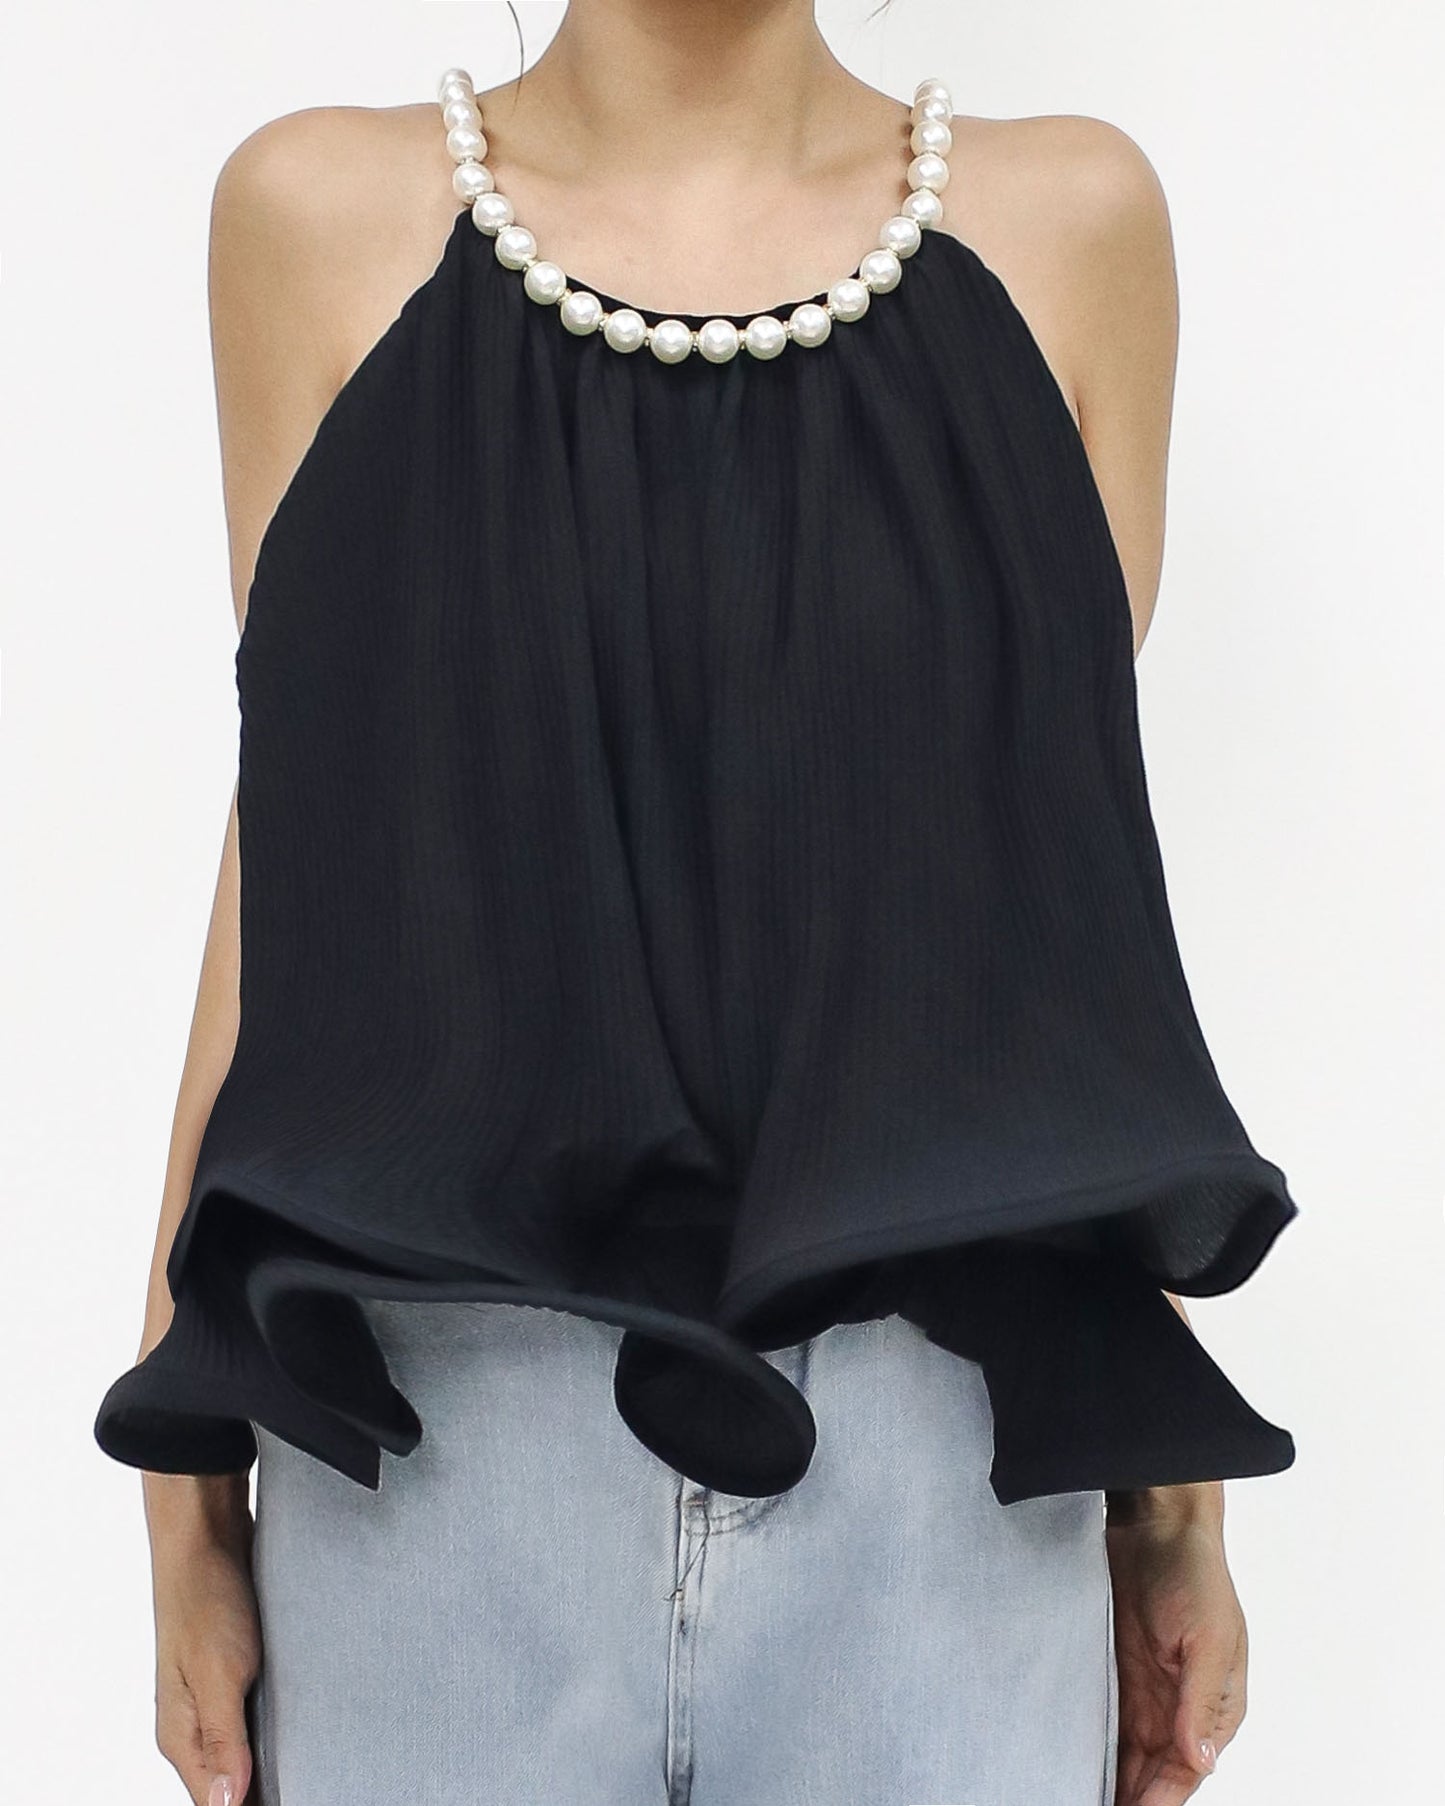 black pleats w/ pearls neckline vest *pre-order*